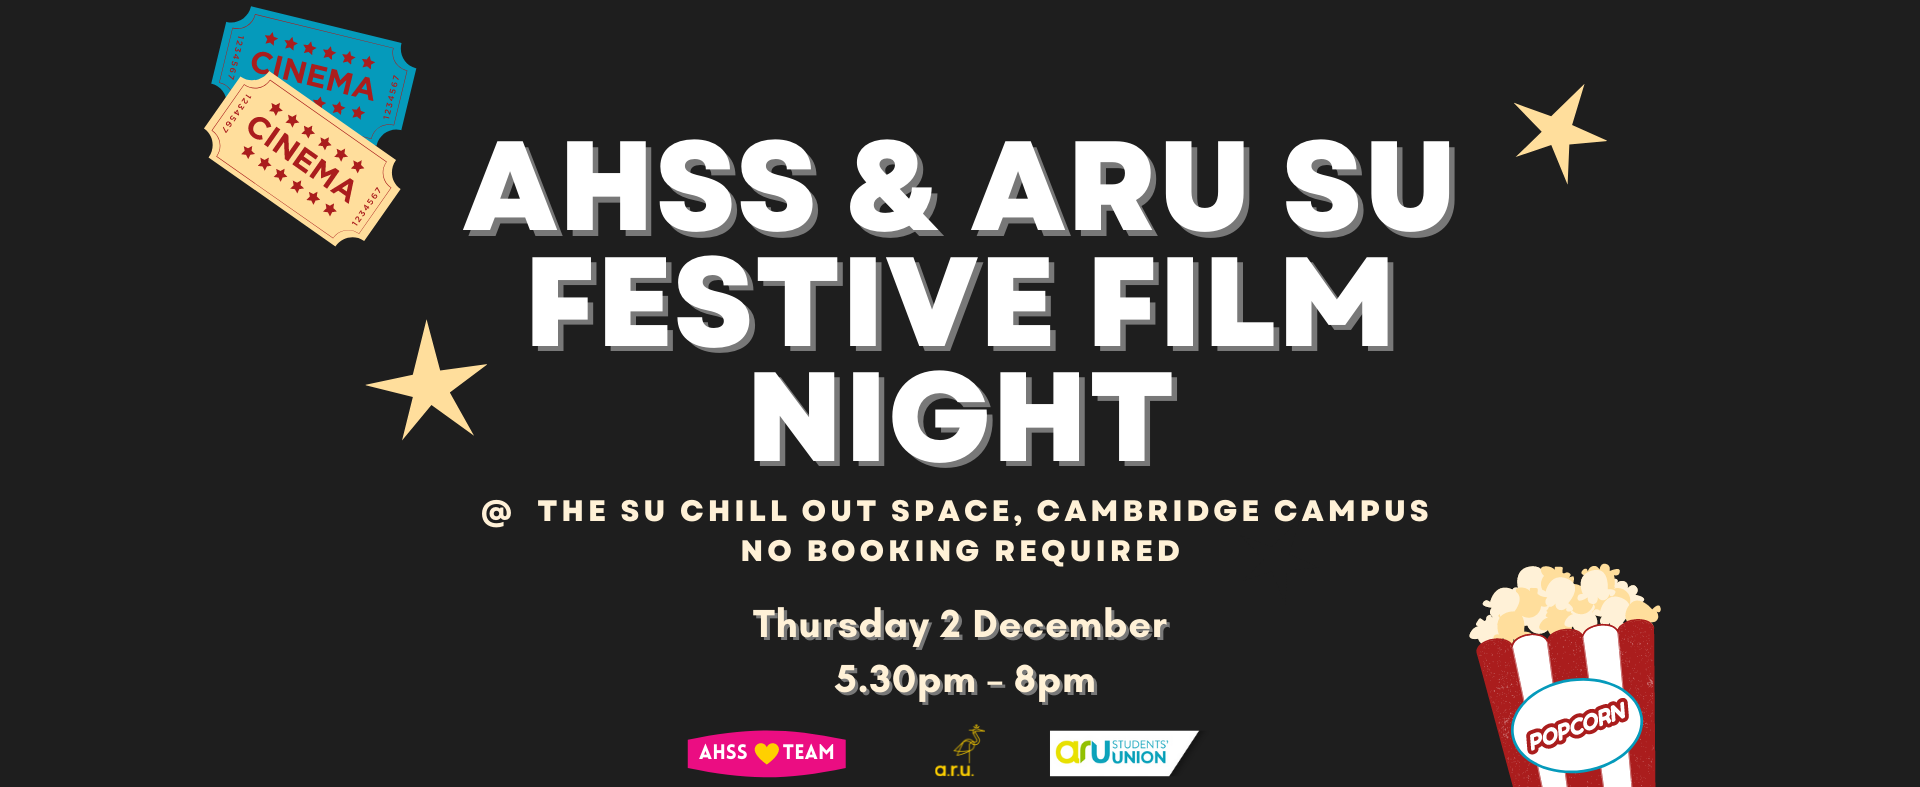 Festive Film Night - Arts, Humanities & Social Sciences & ARU Student's Union